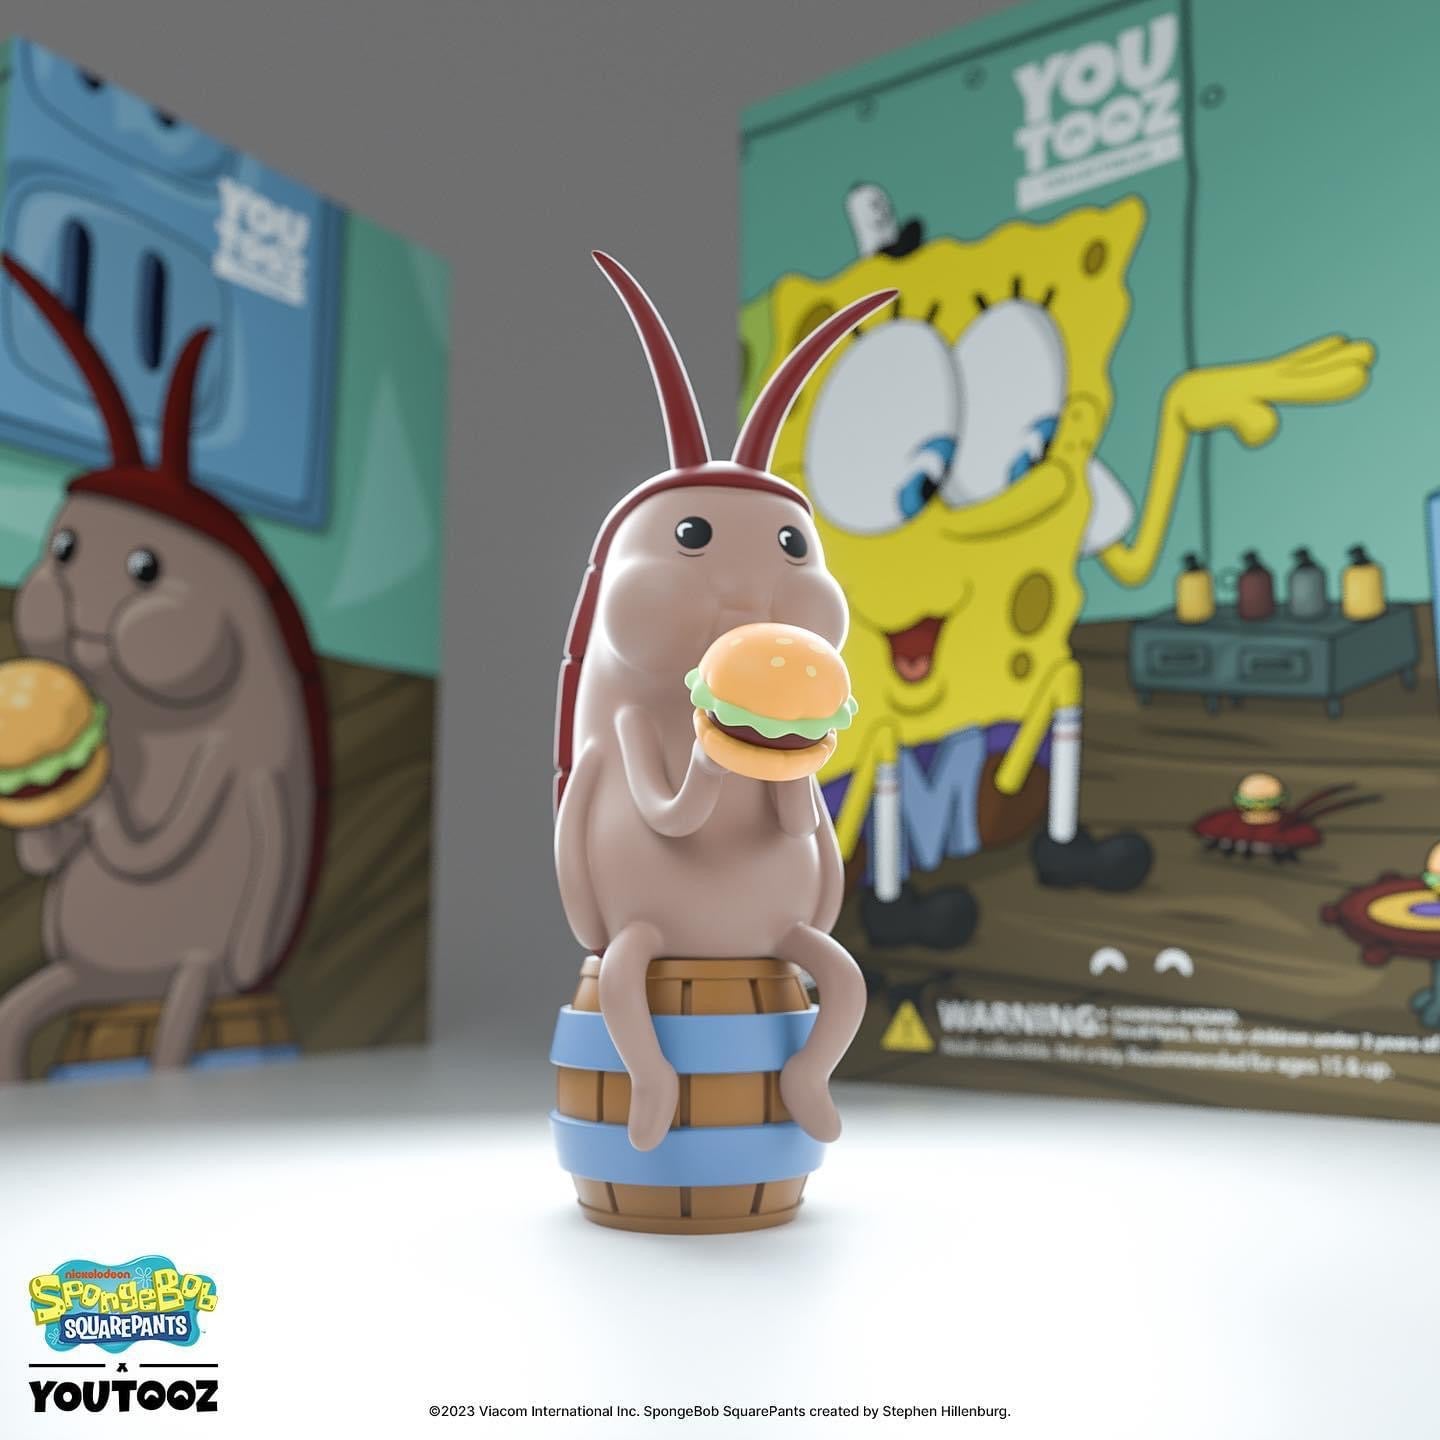 Bob l'éponge Vinyl figurine Cockroach Cafard Youtooz Viacom Nickelodeon SpongeBob Square Pants